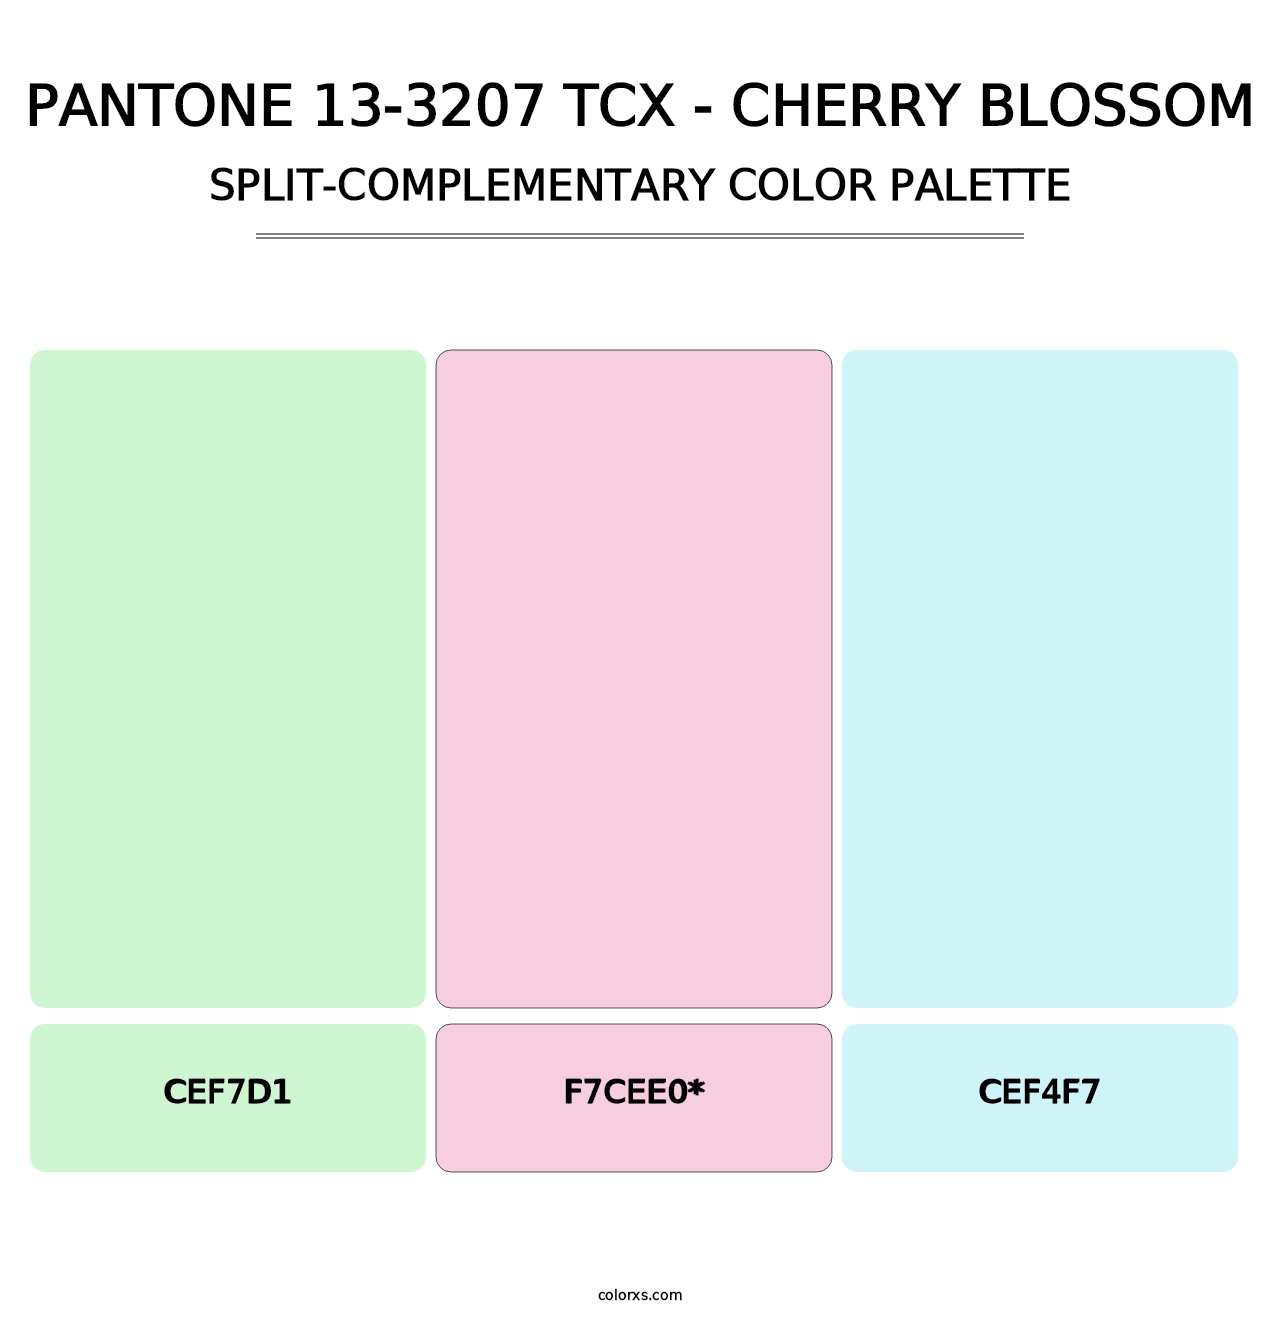 PANTONE 13-3207 TCX - Cherry Blossom - Split-Complementary Color Palette